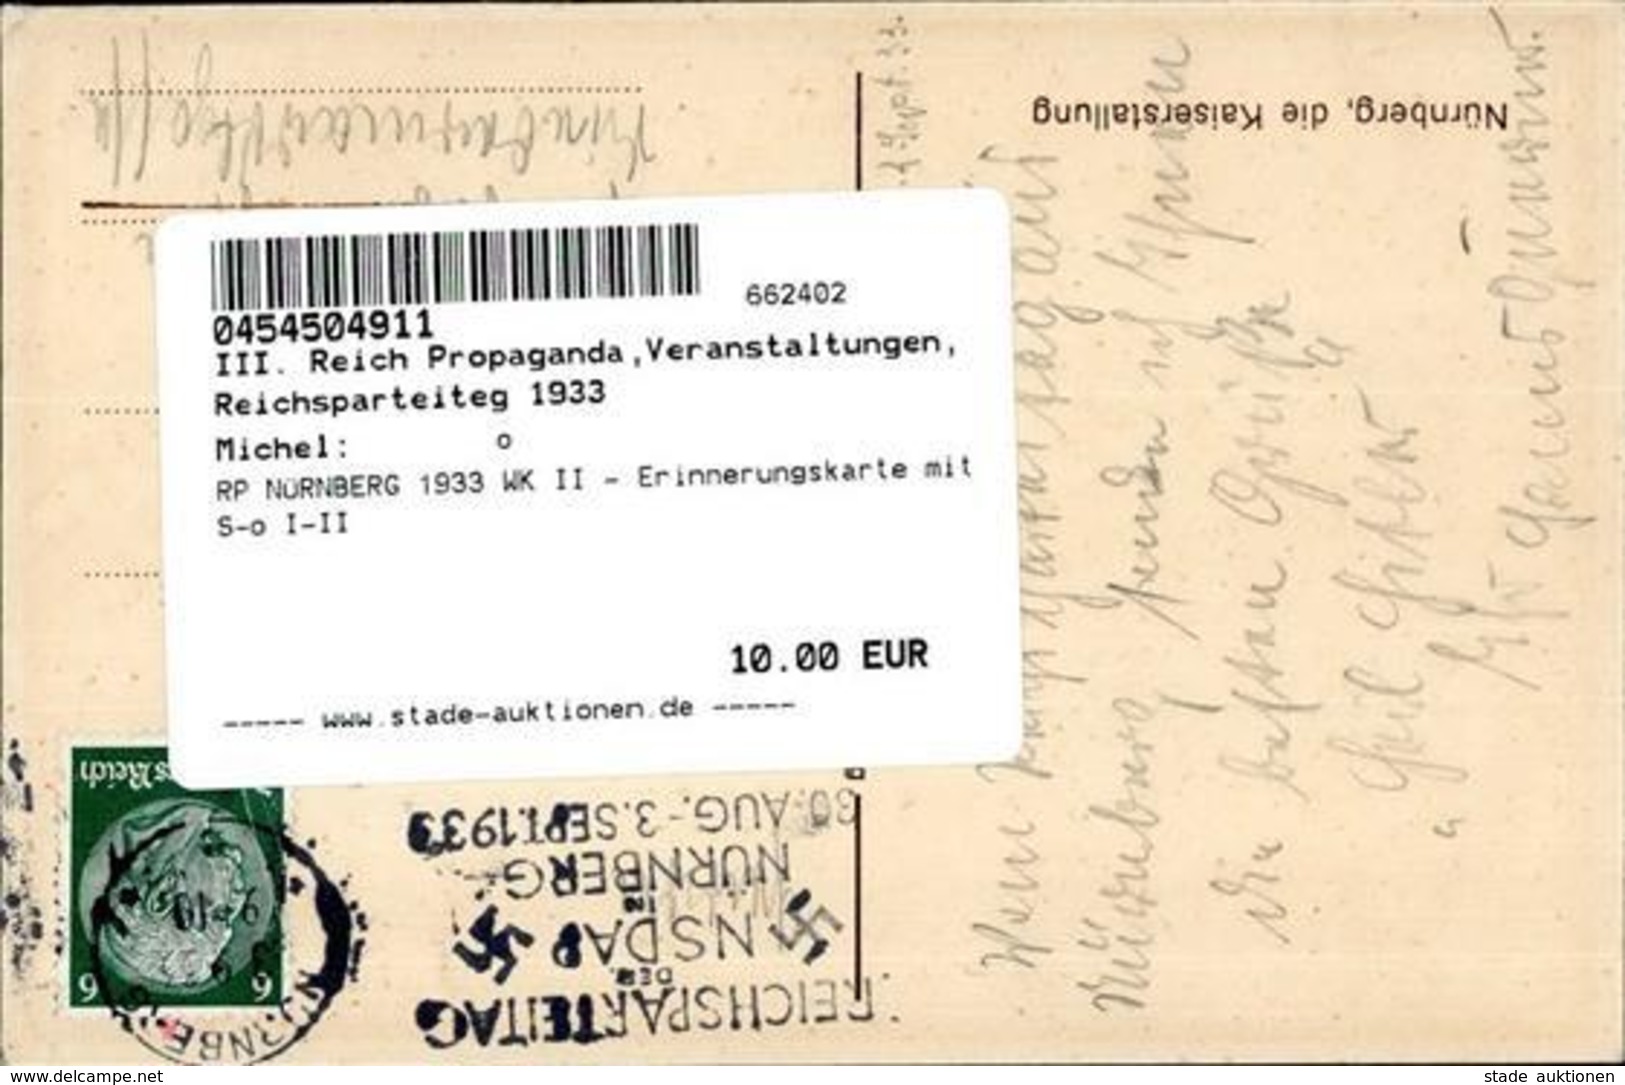 RP NÜRNBERG 1933 WK II - Erinnerungskarte Mit S-o I-II - Weltkrieg 1939-45